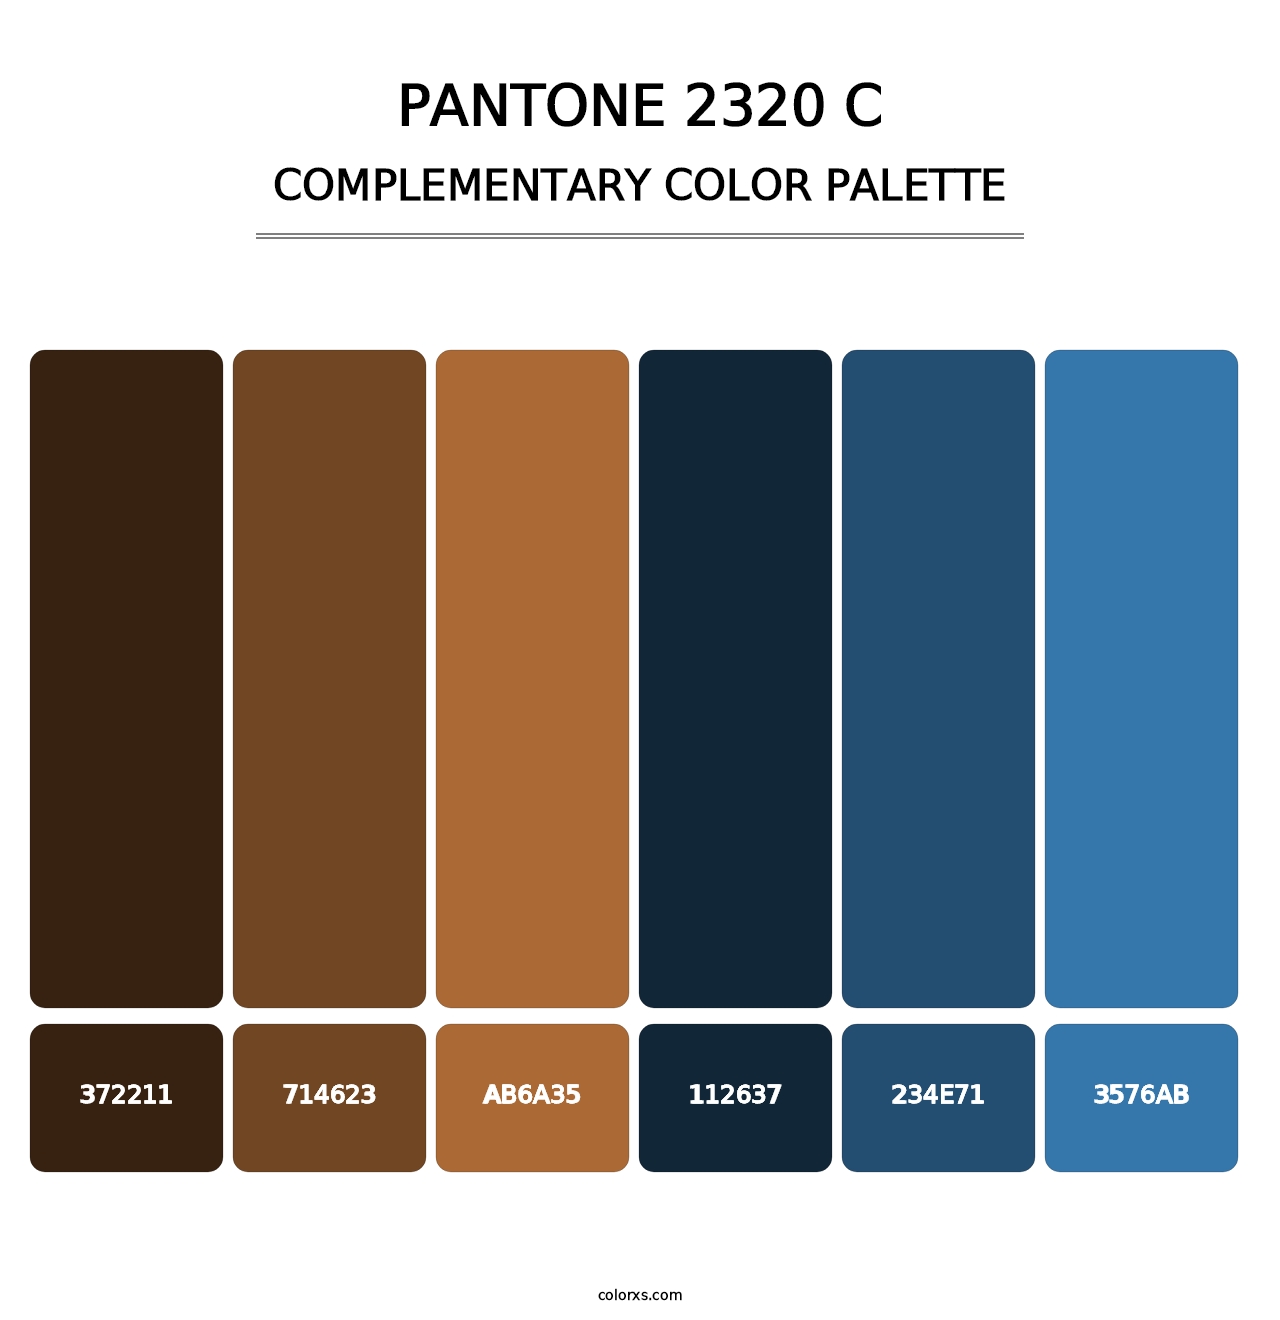 PANTONE 2320 C - Complementary Color Palette